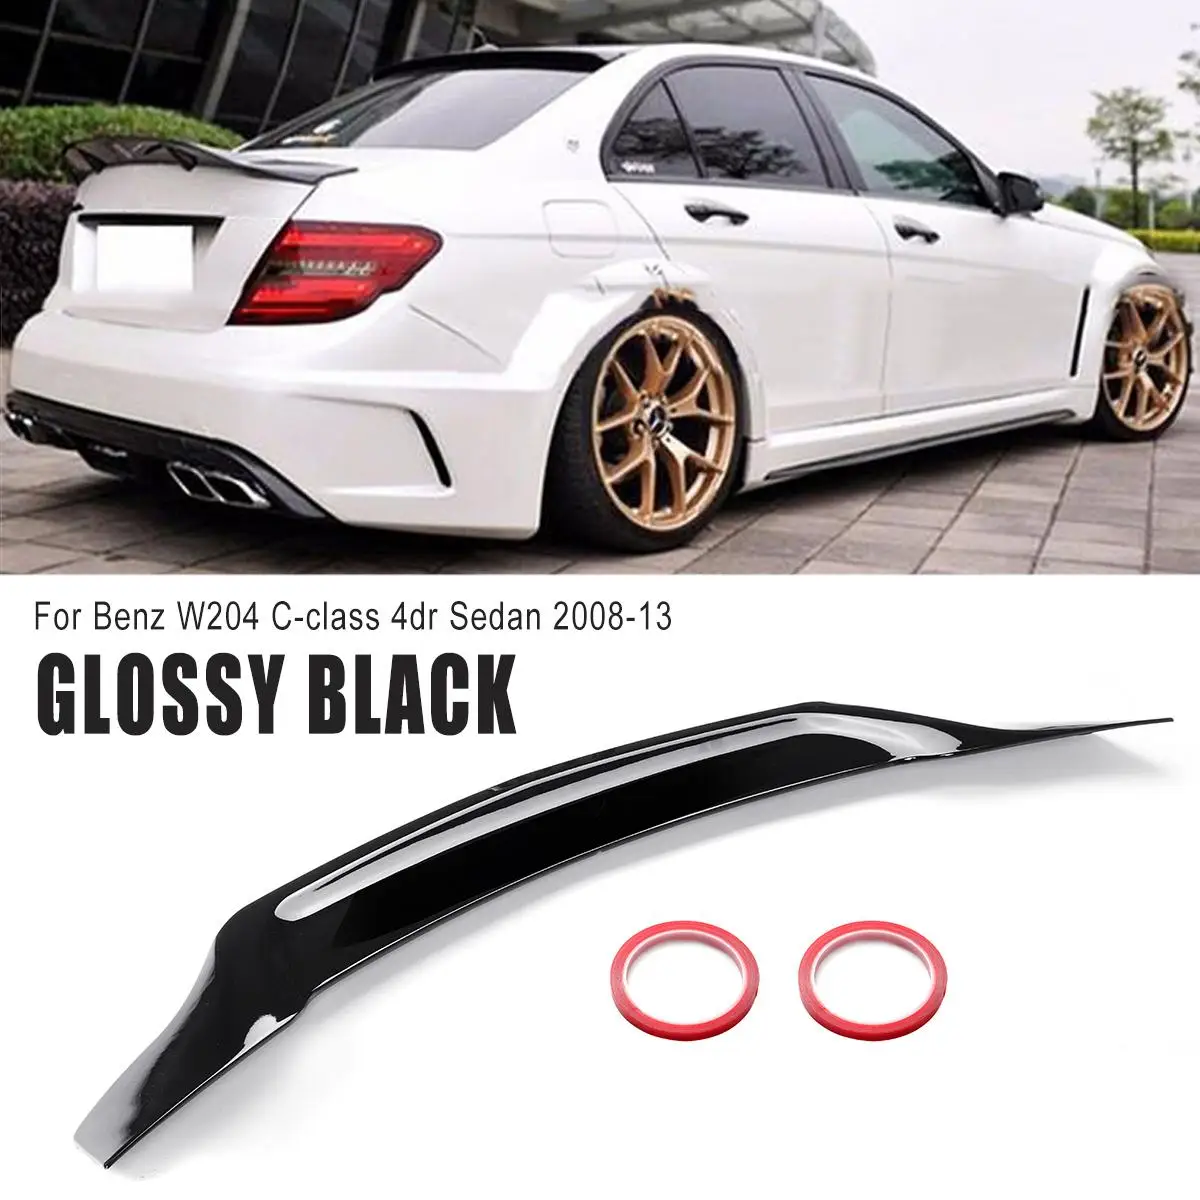 

ABS Car Rear Trunk Spoiler Lip Wing Guard Glossy black Carbon Fiber Color For Benz W204 C-class 4dr Sedan 2008-13 Trunk Spoiler